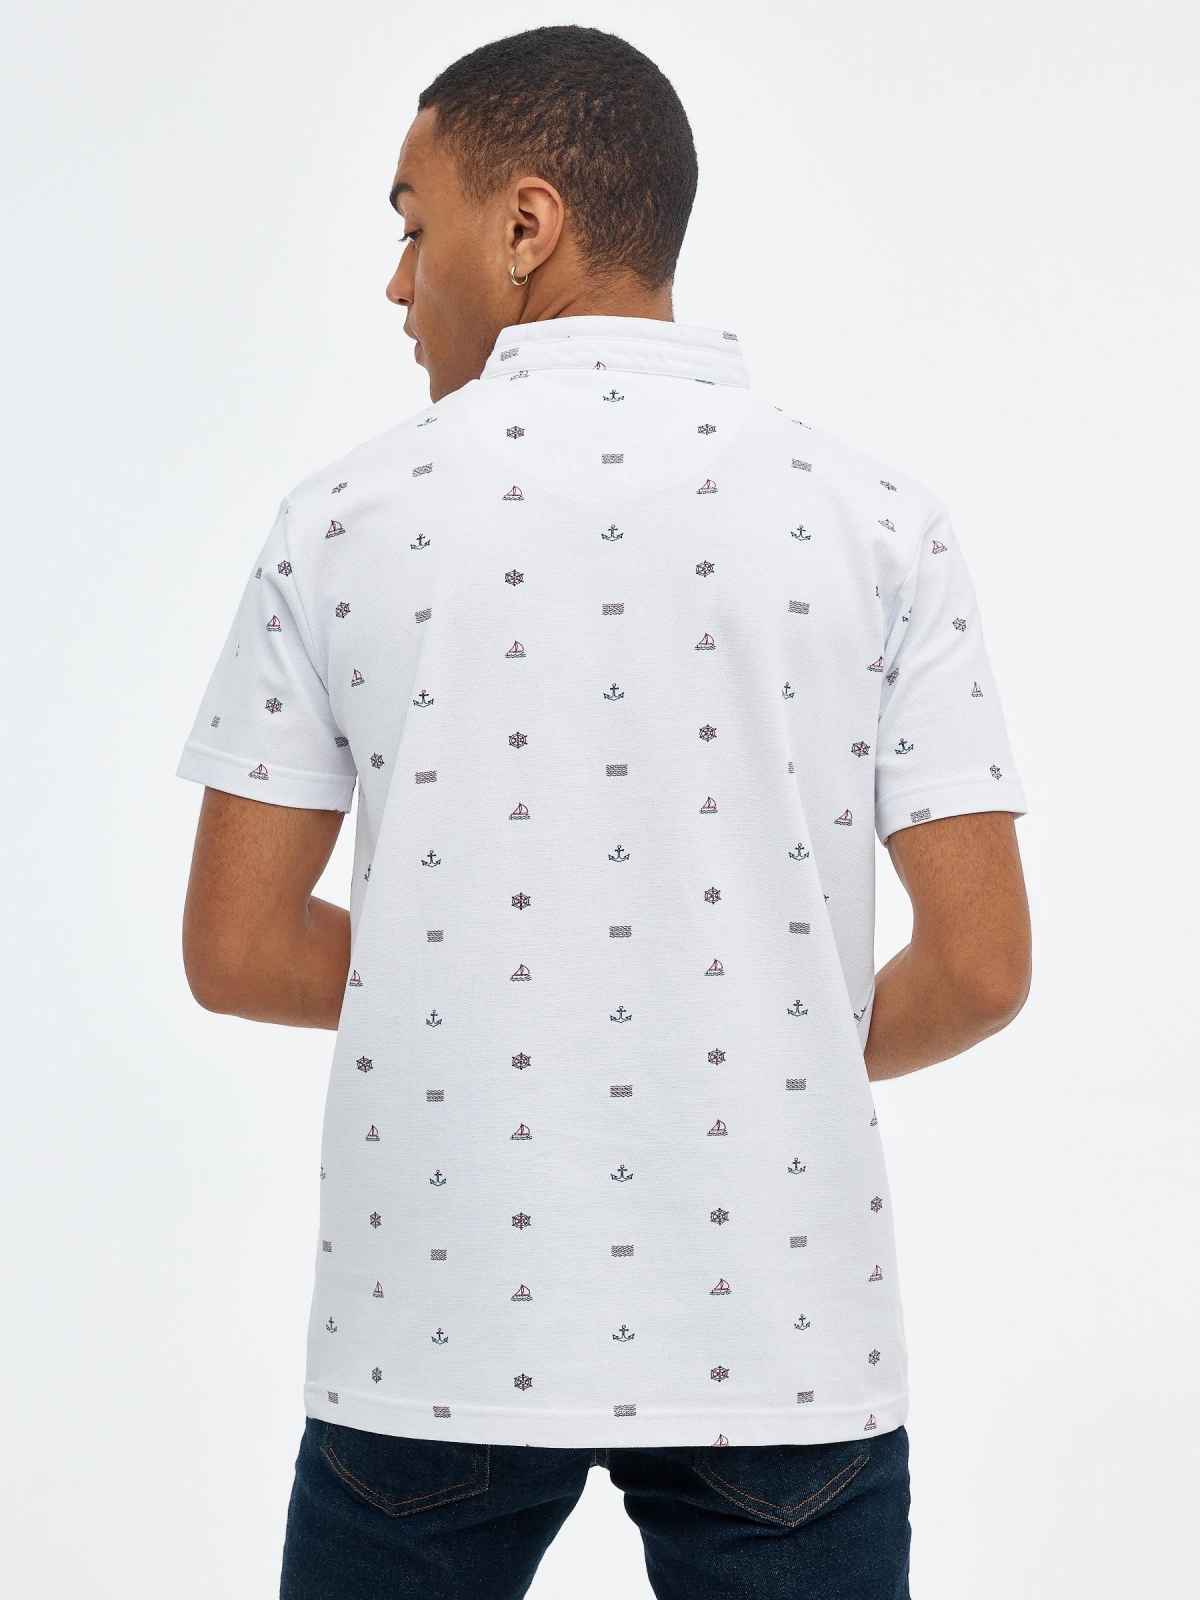 Sailor miniprint polo shirt white middle back view